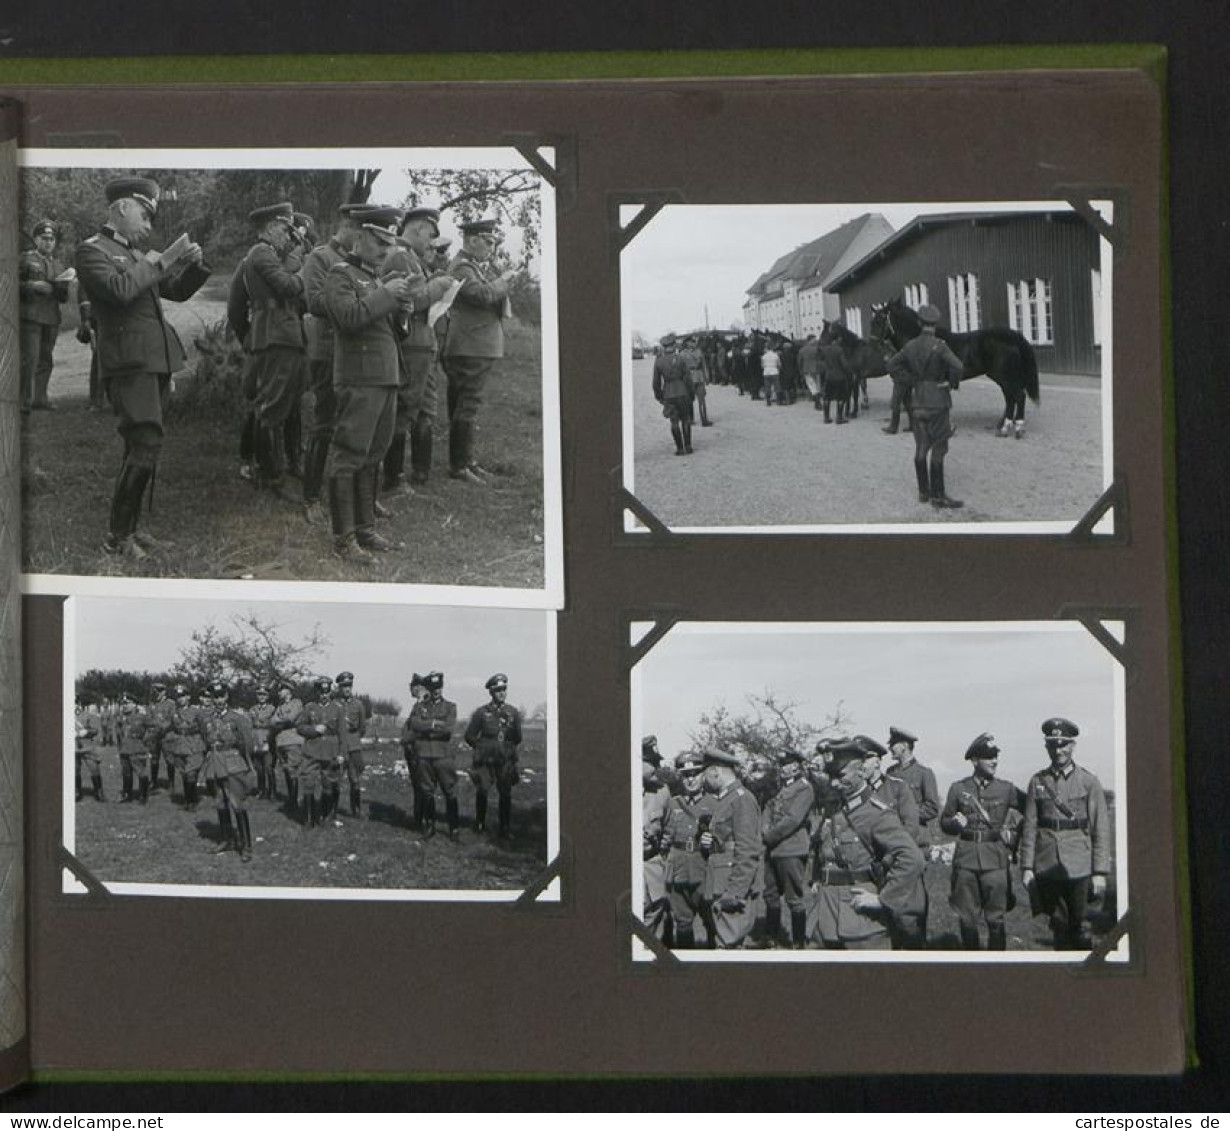 Fotoalbum mit 150 Fotografien, Giessen Studenten, Theater, Militär, Soldaten, Fussball, Wappen 